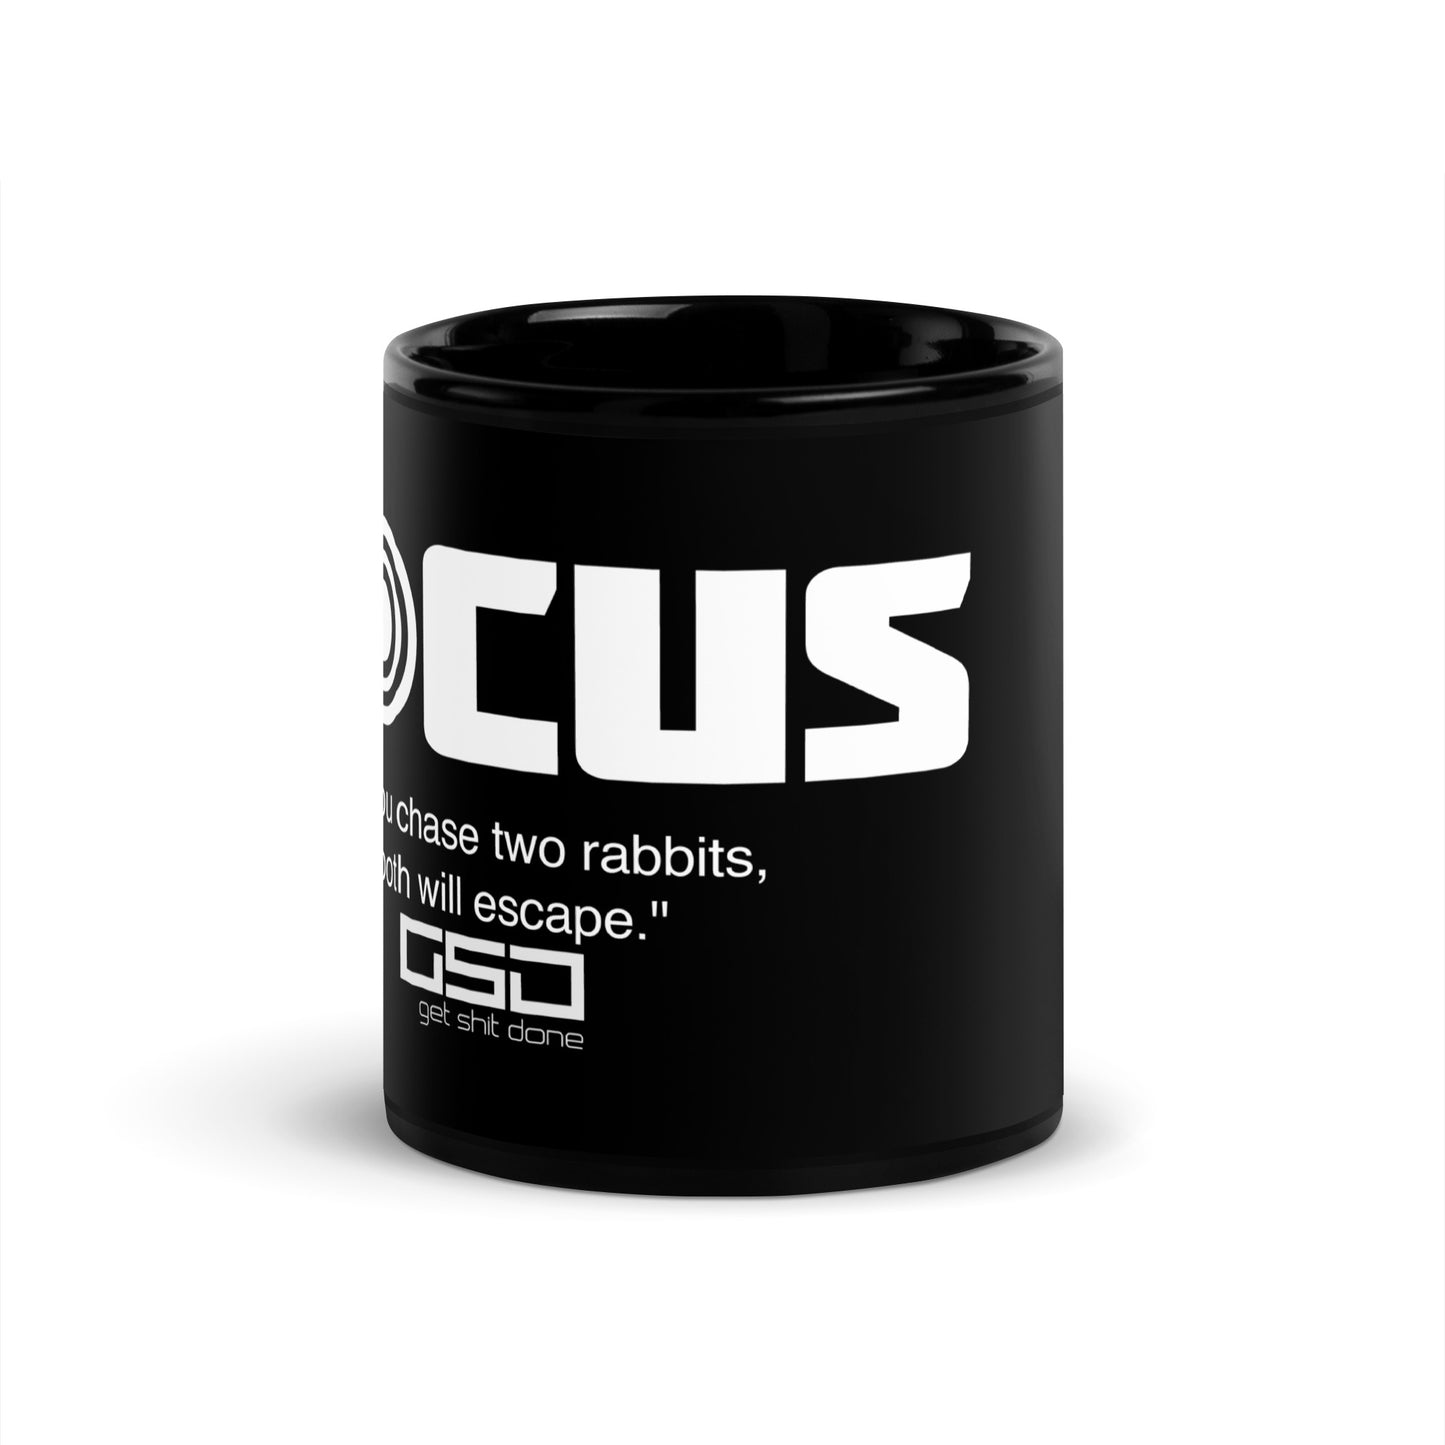 Focus-Black Glossy Mug